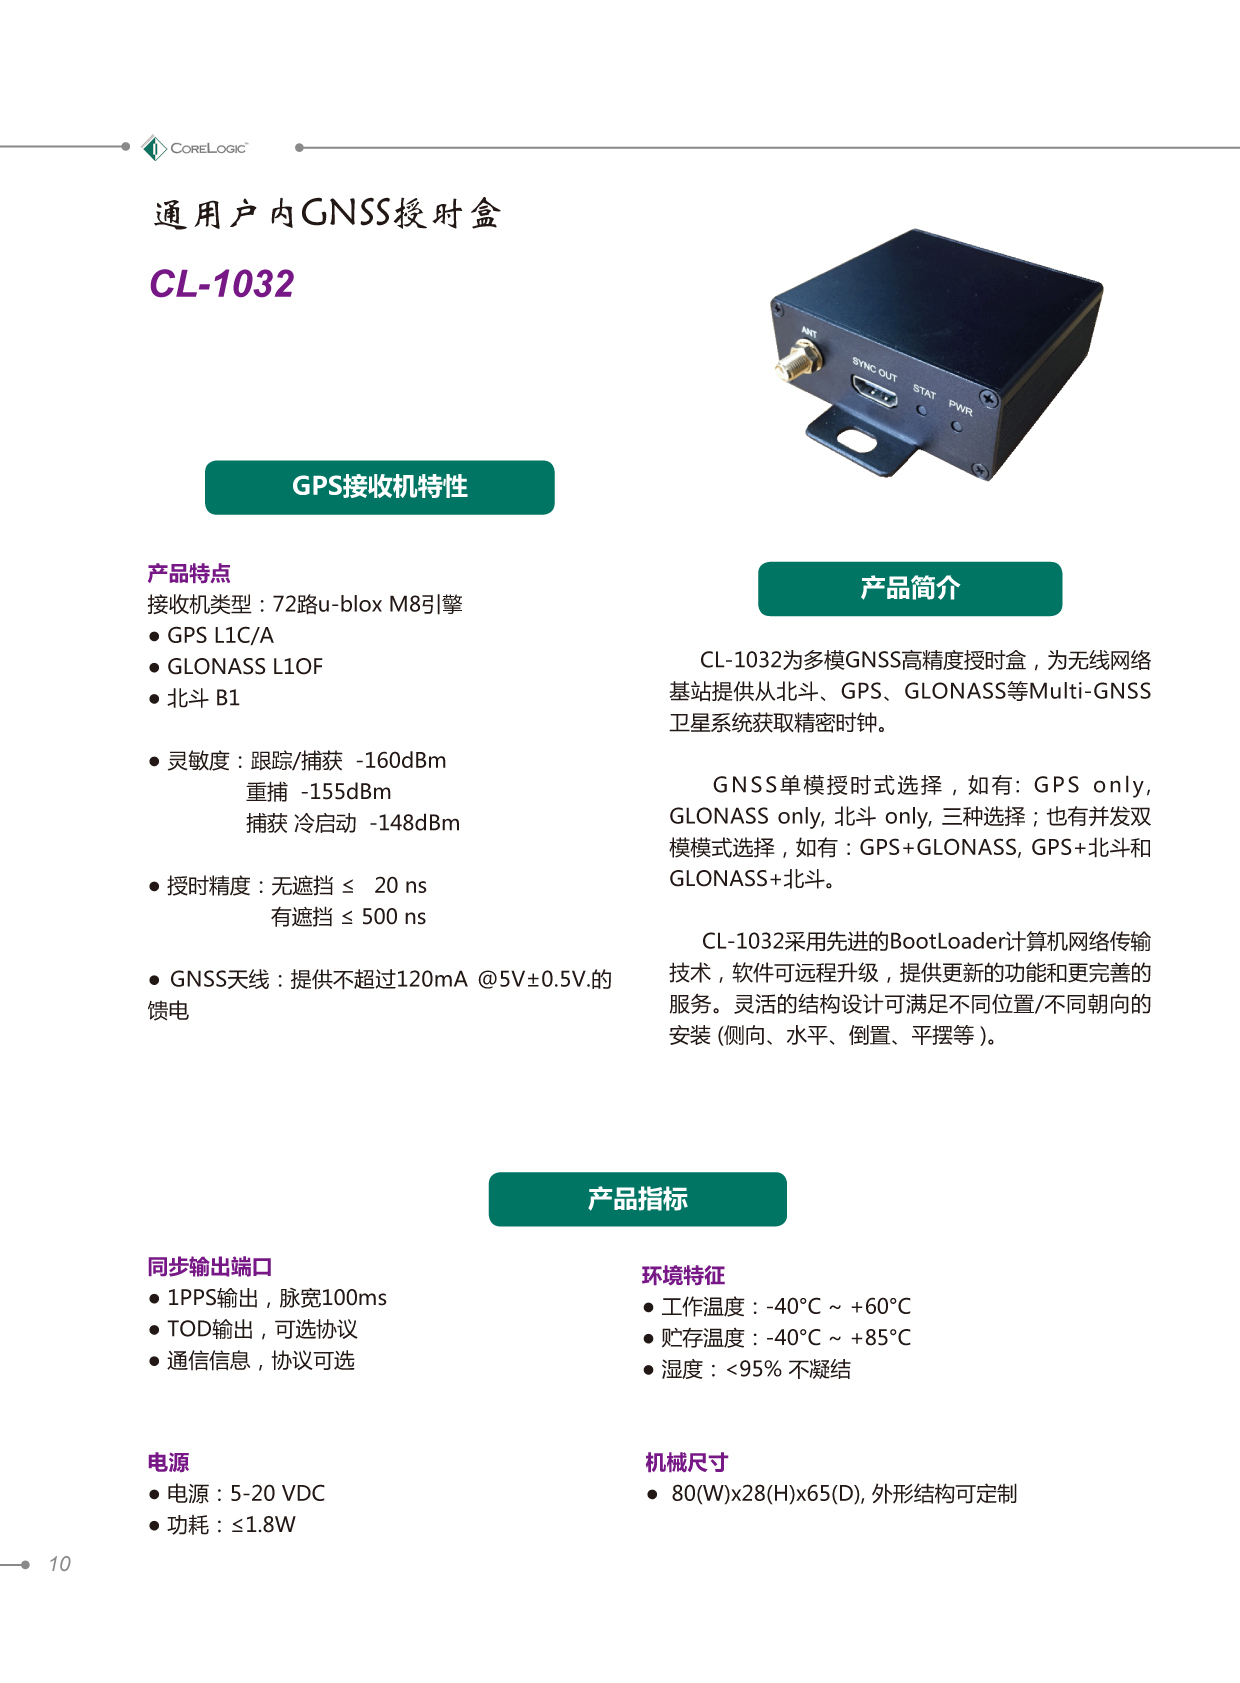 cl-1032产品详情